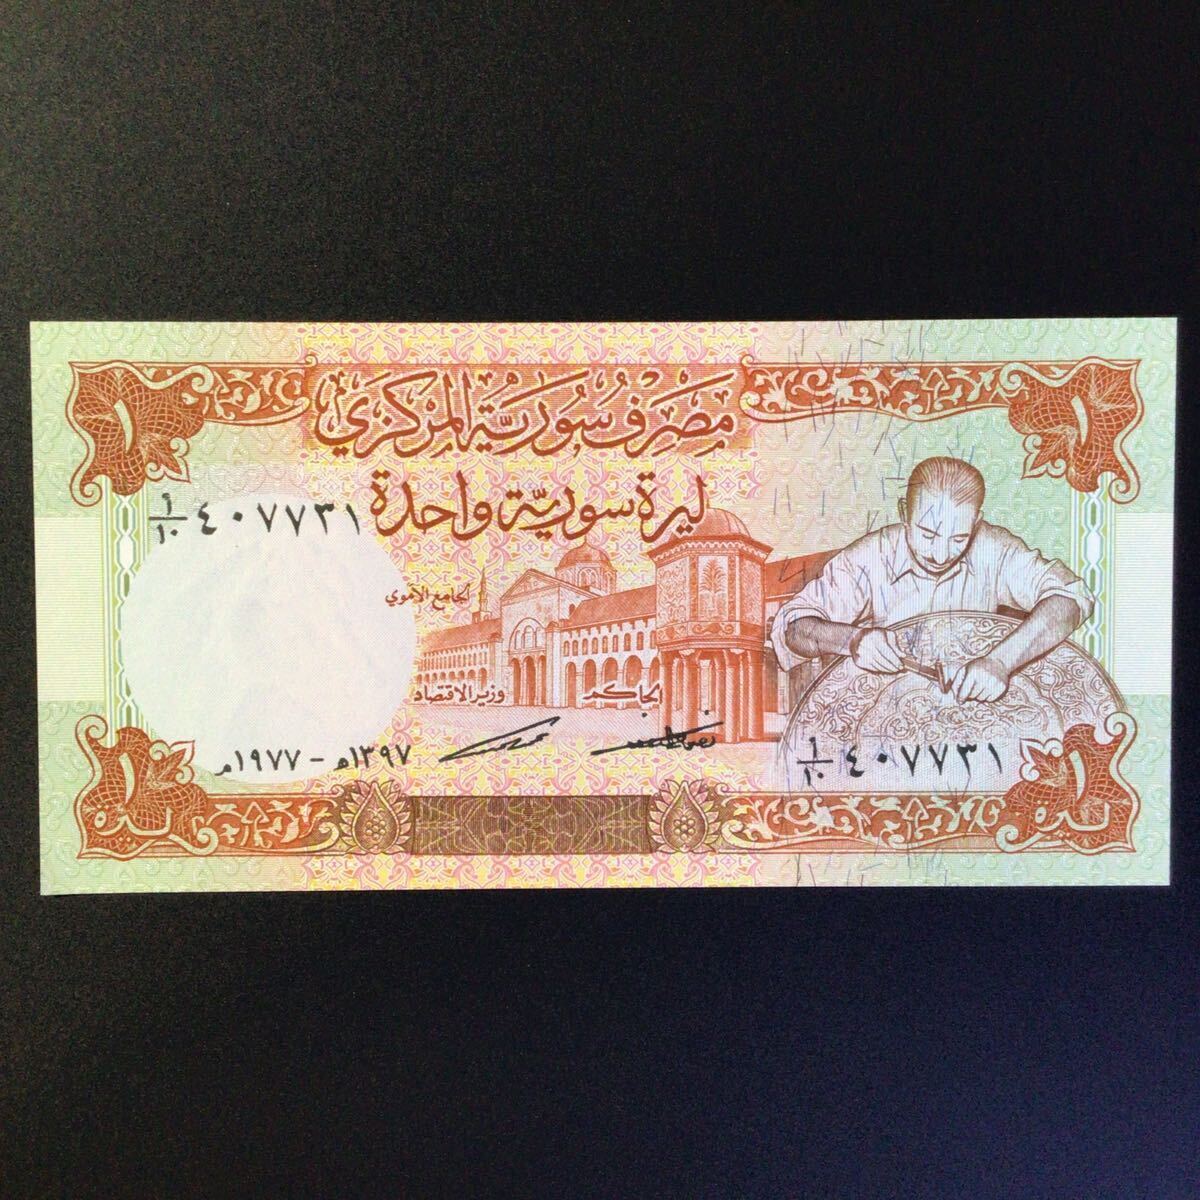 World Paper Money SYRIA 1 Pound【1977】の画像1